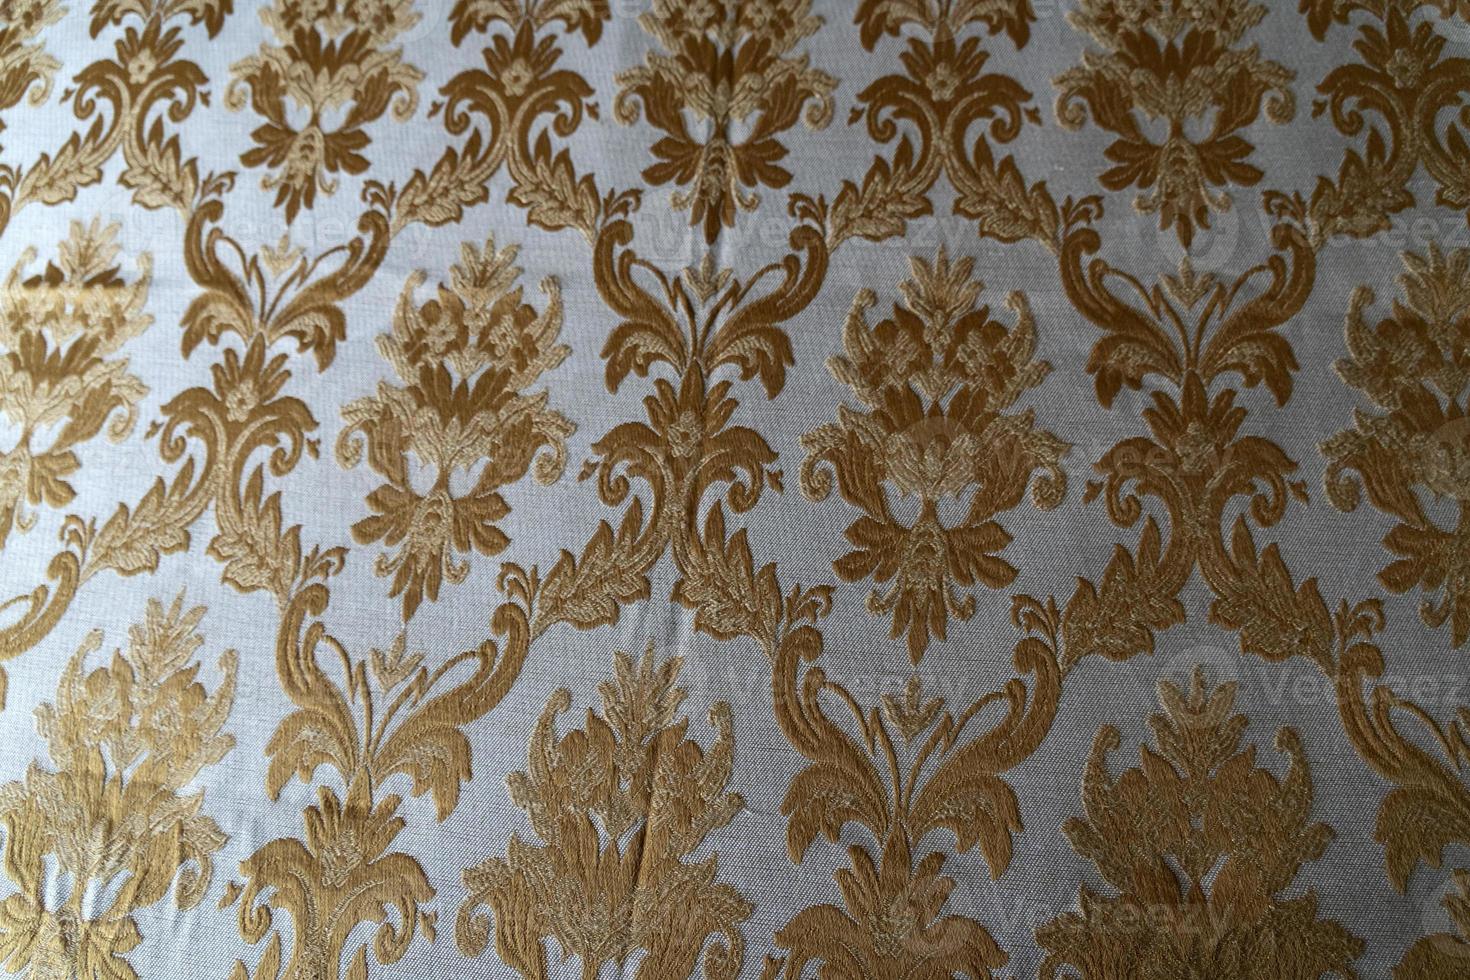 medieval tecido textura fundo ouro e branco foto